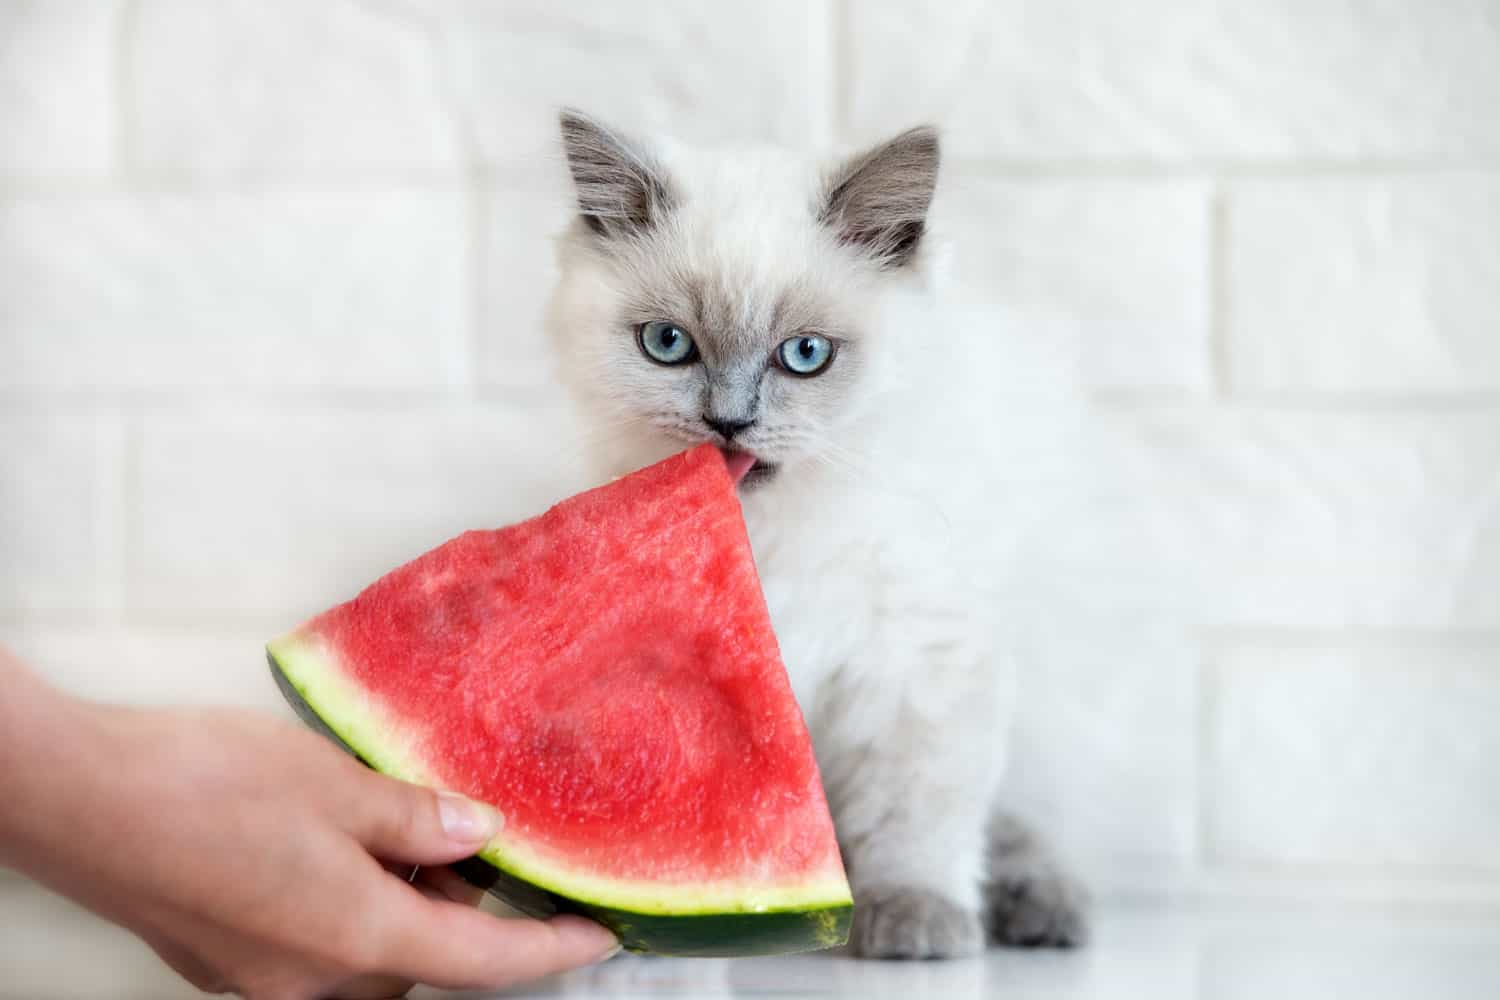 Cat licking watermelon